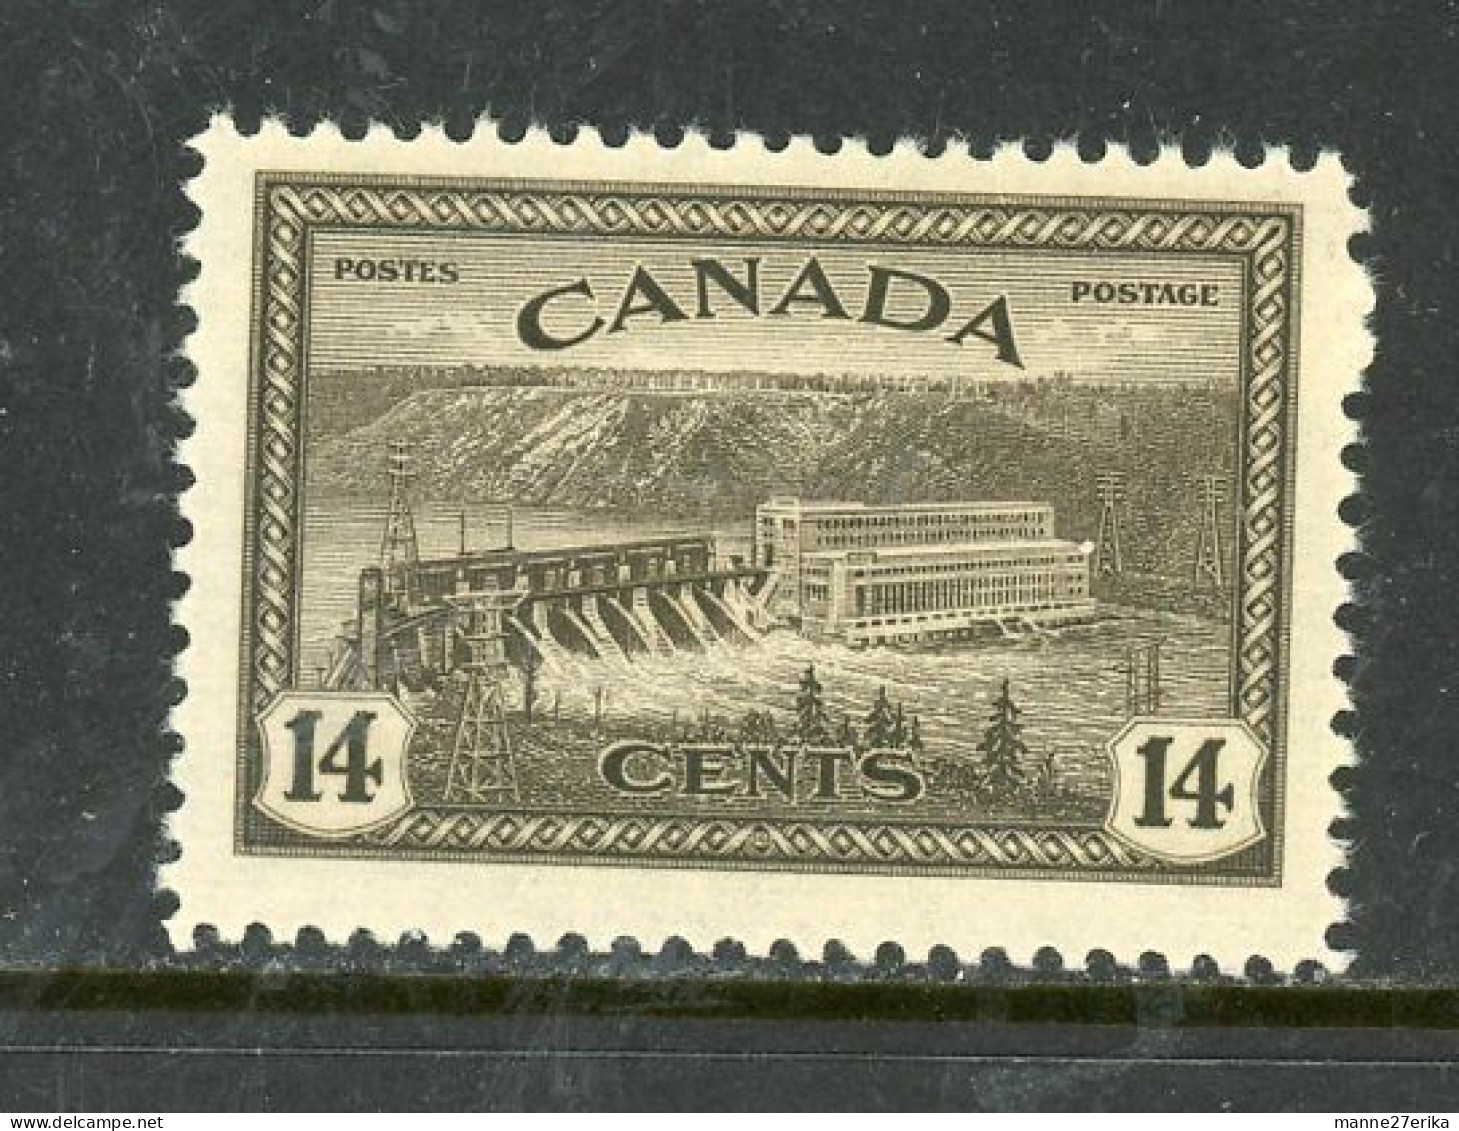 Canada MNH 1946 Hydroelectric Station, Quebec - Ungebraucht